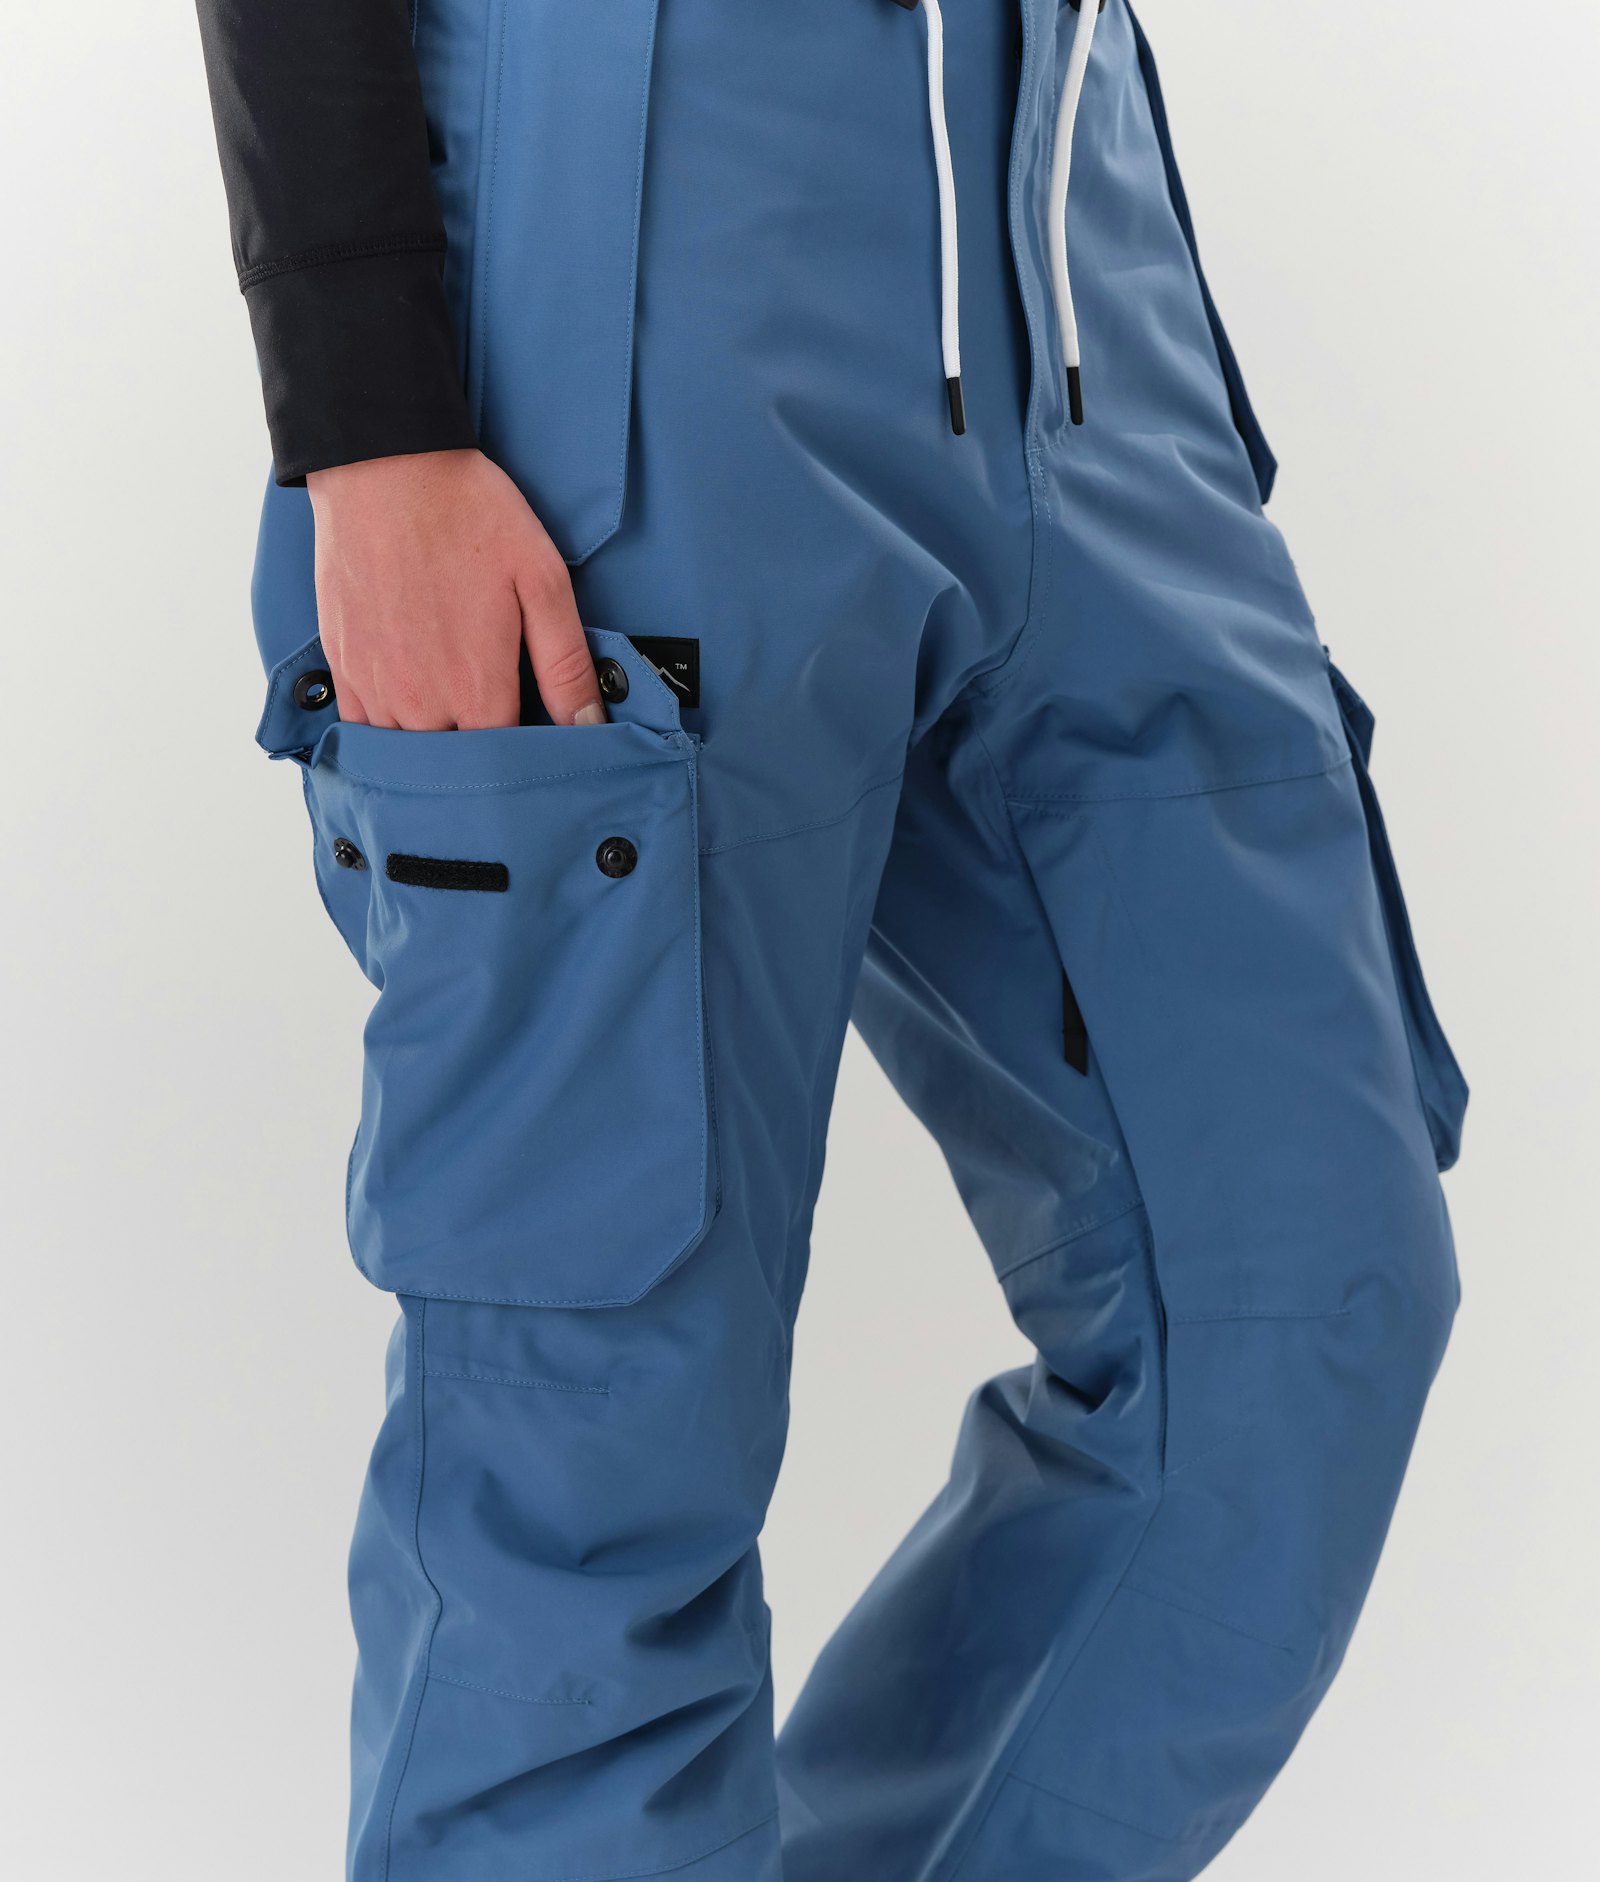 Dope Iconic W 2020 Pantalon de Ski Femme Blue Steel